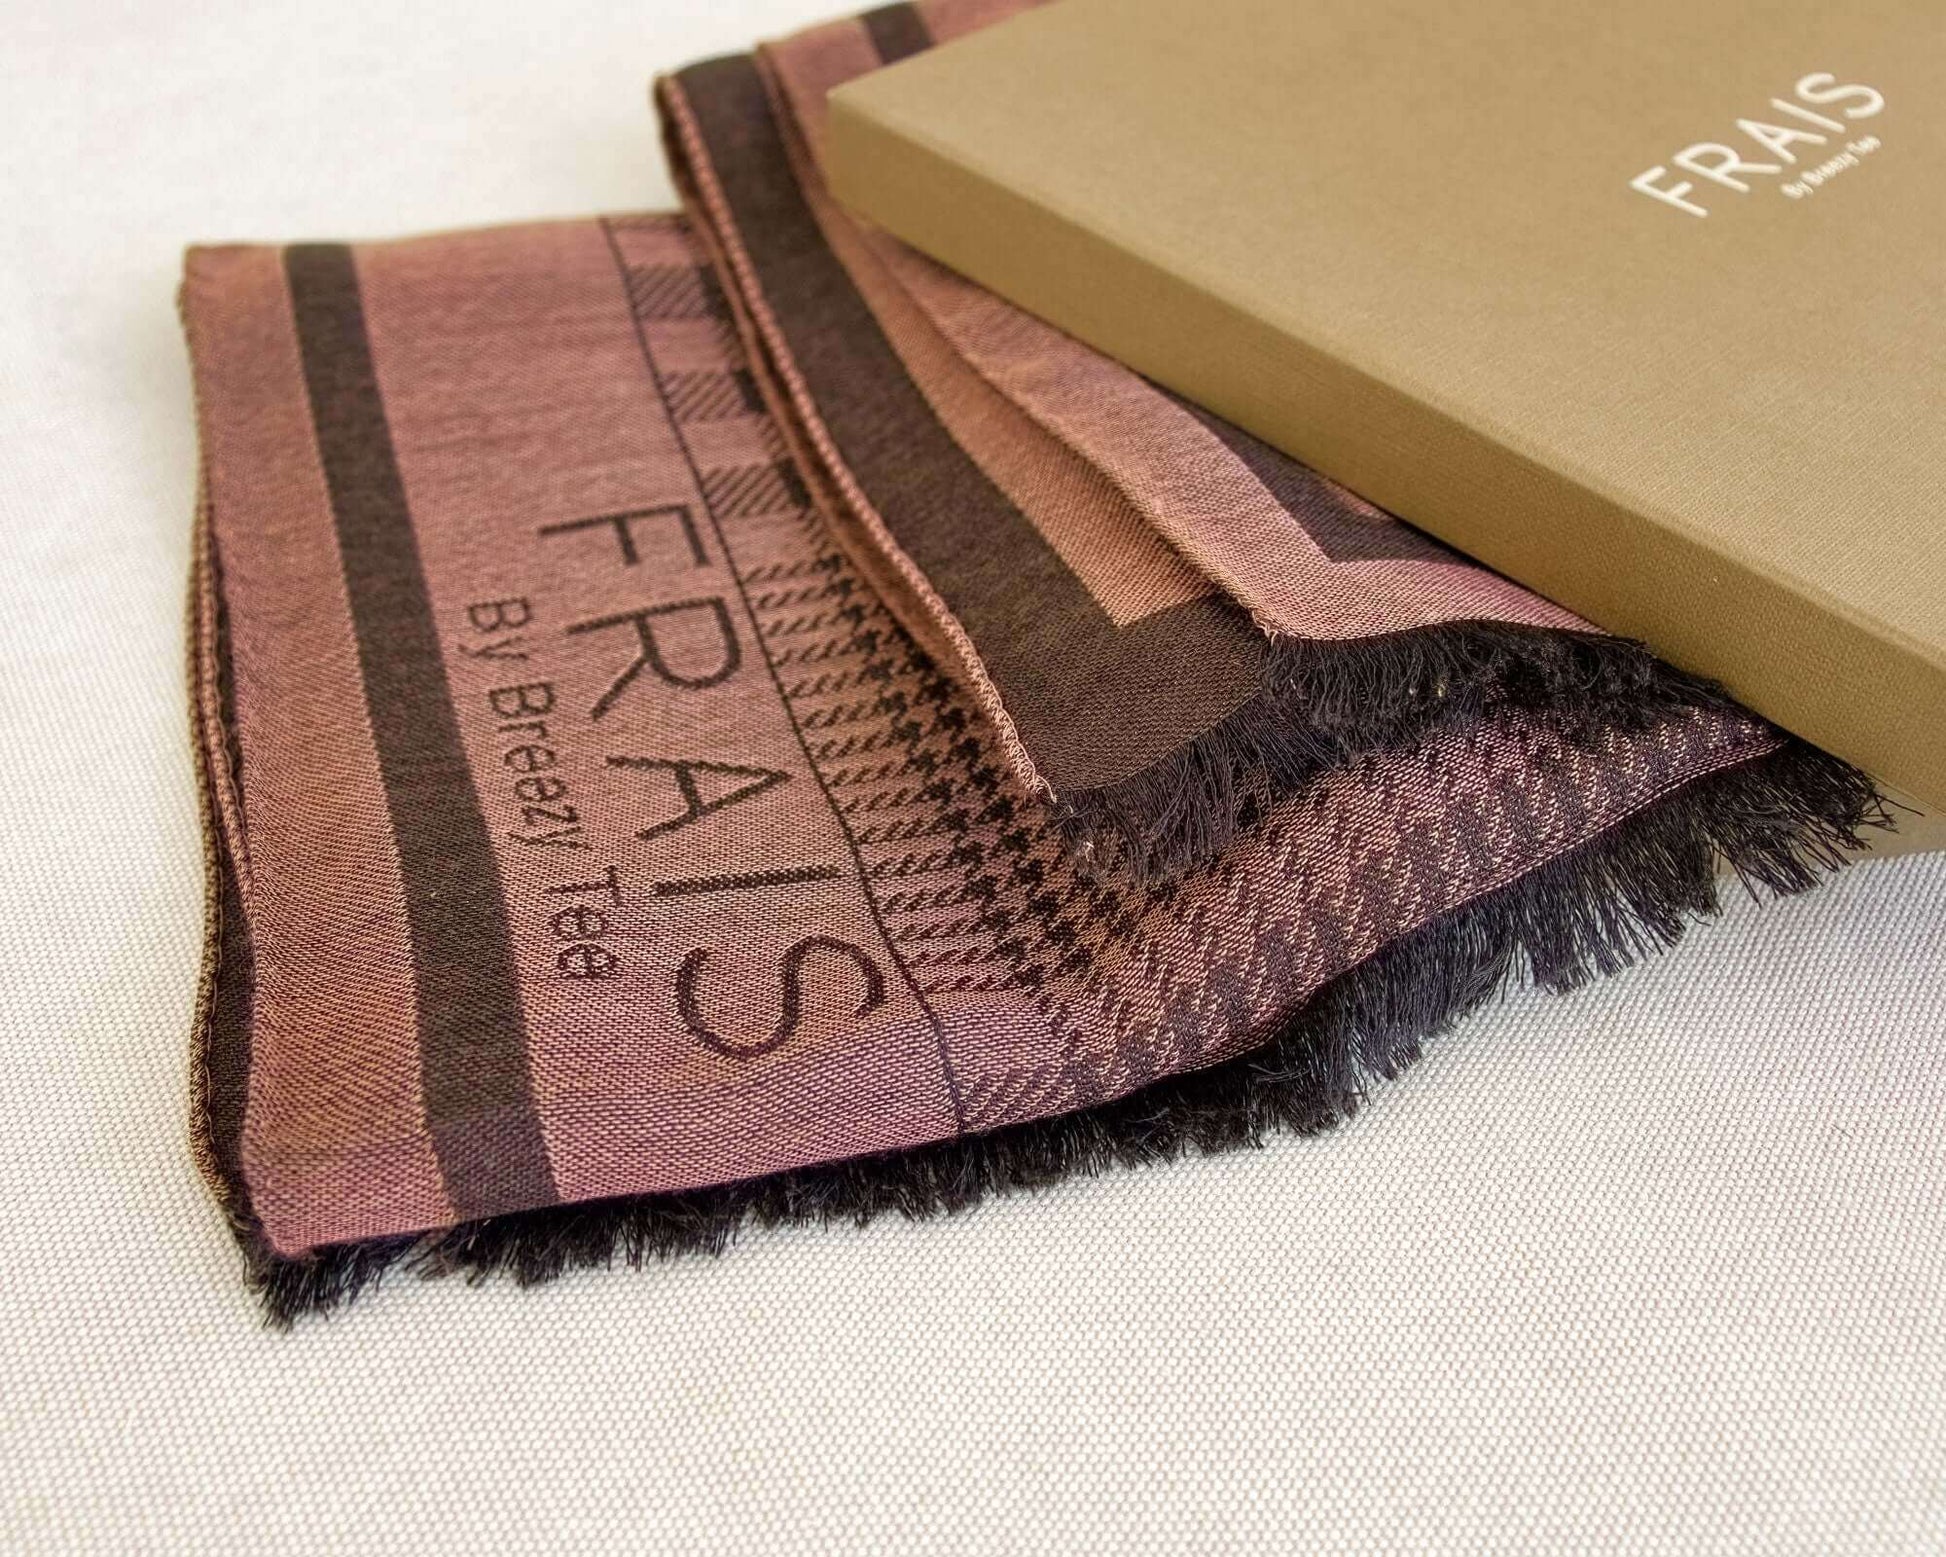 Mauve Jacquard Scarf, Cashmere Silk Wool Blend, Plaid Scarf, Original Design, Winter Scarf, Made In Italy